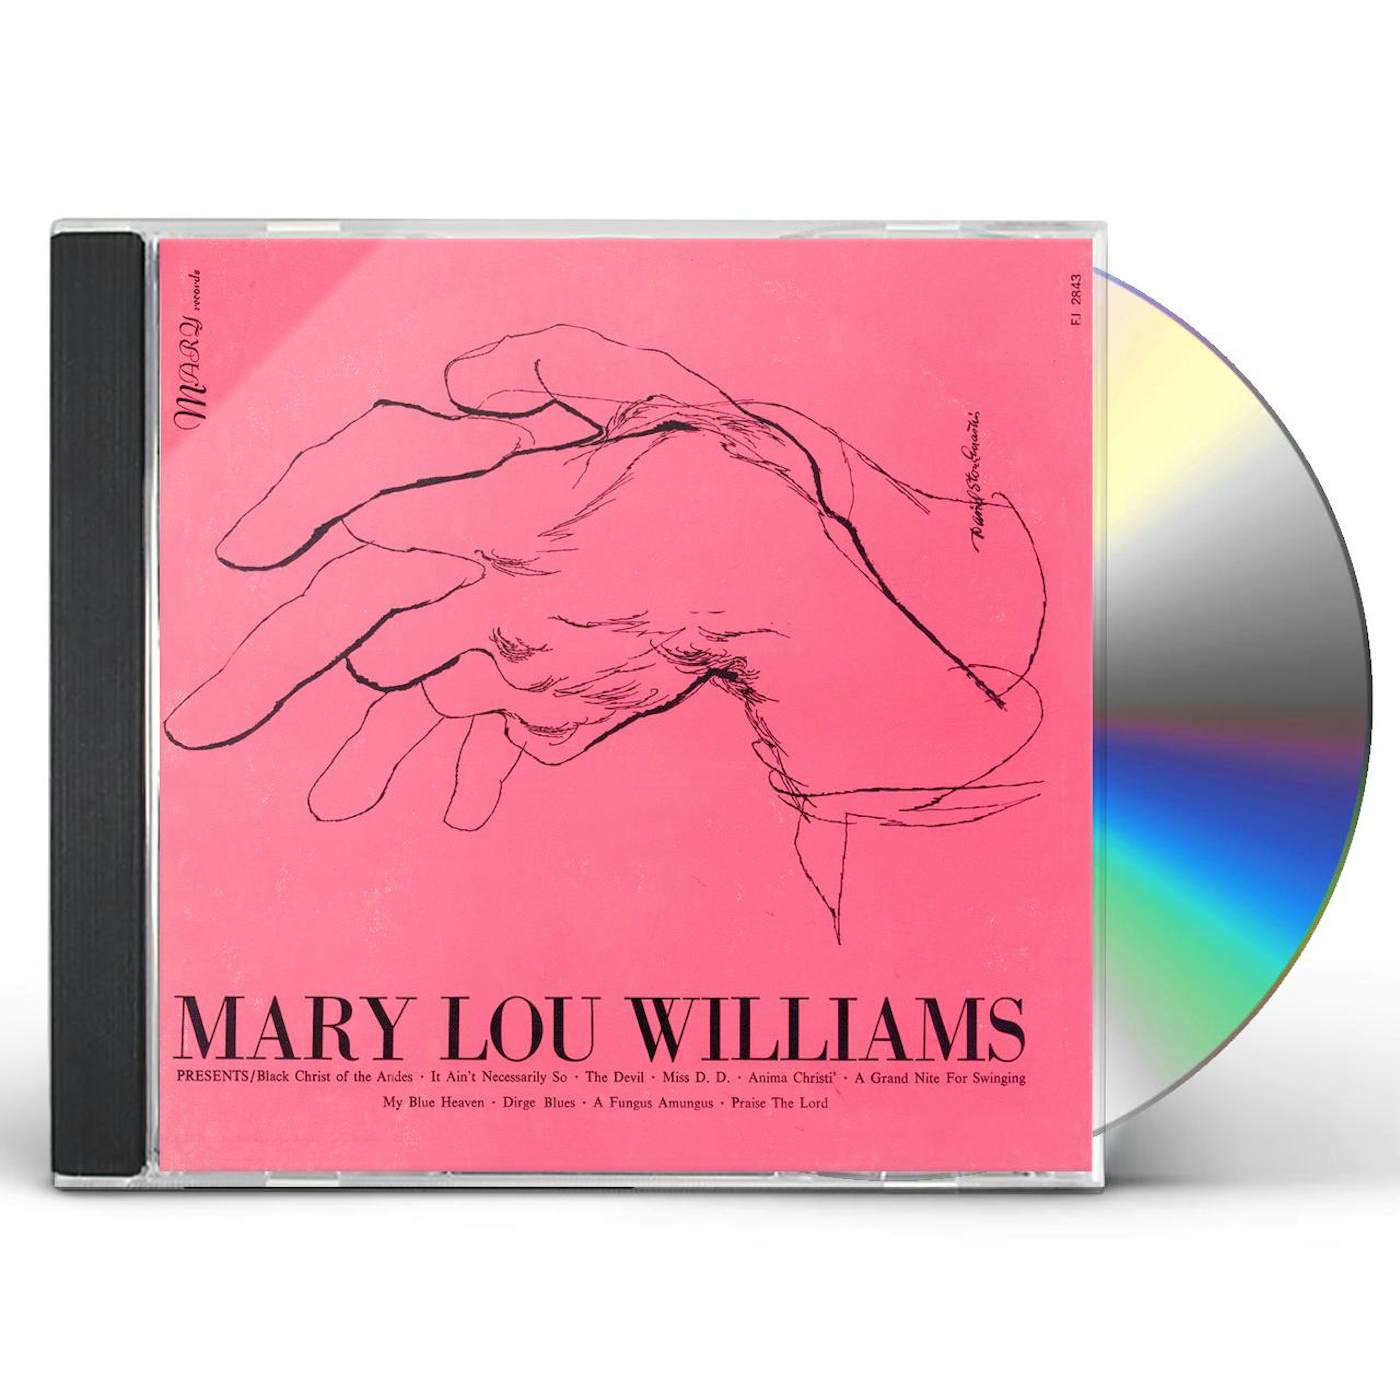 MARY LOU WILLIAMS CD